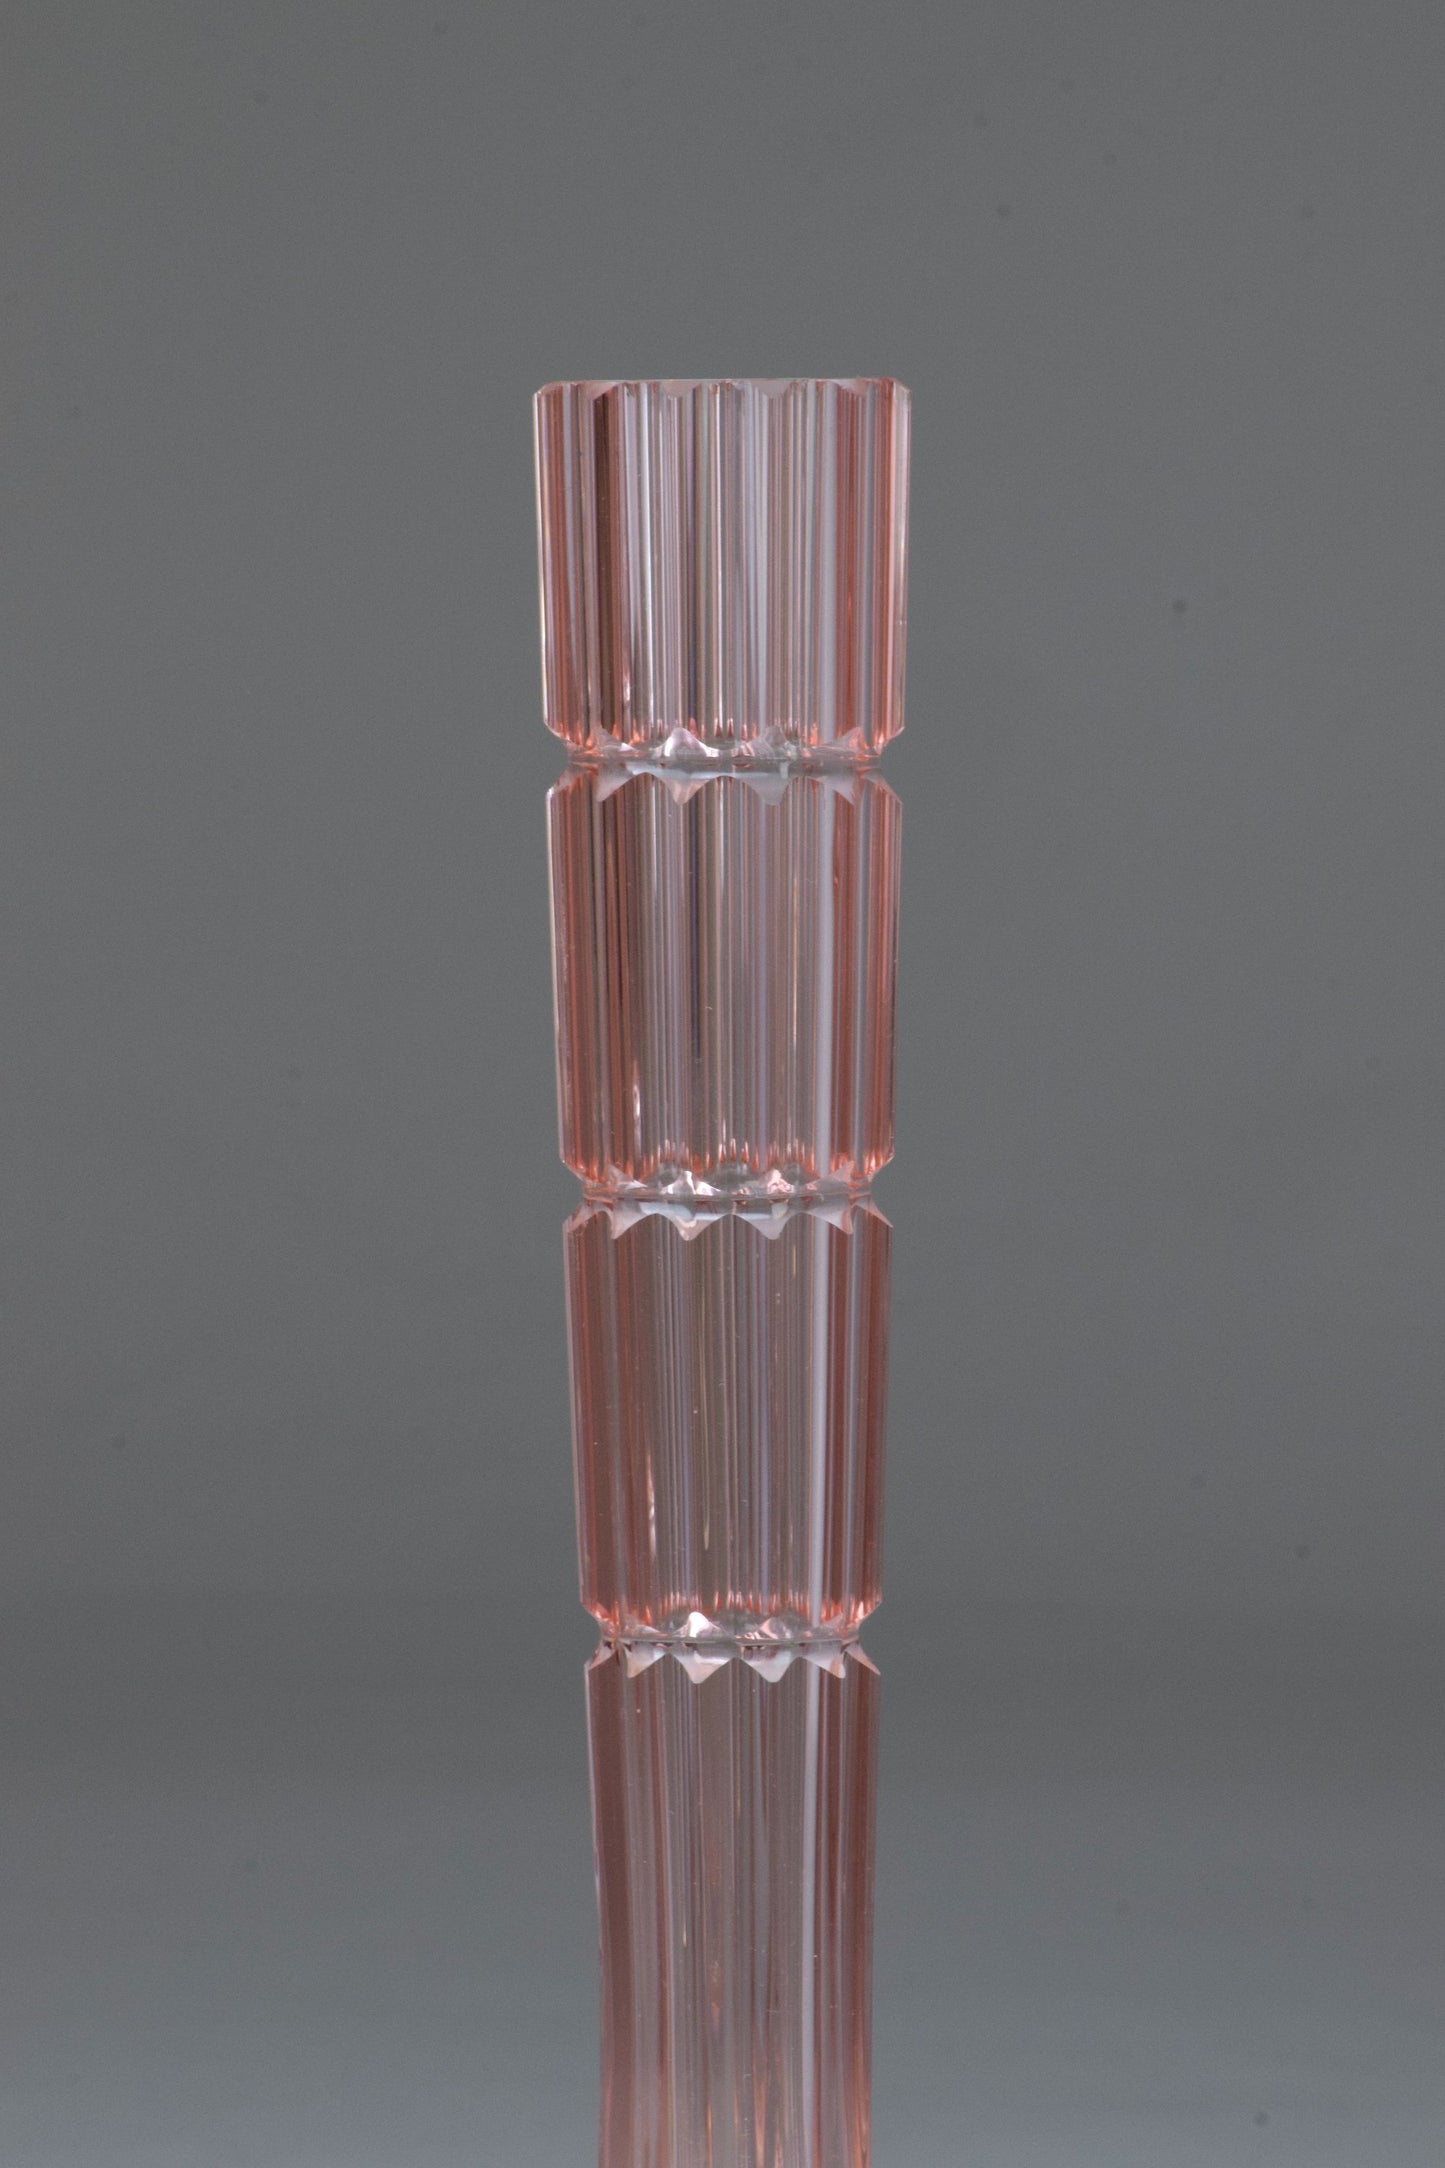 20th Century French Vintage Glass Vases, 1960's - Spirit Gallery 